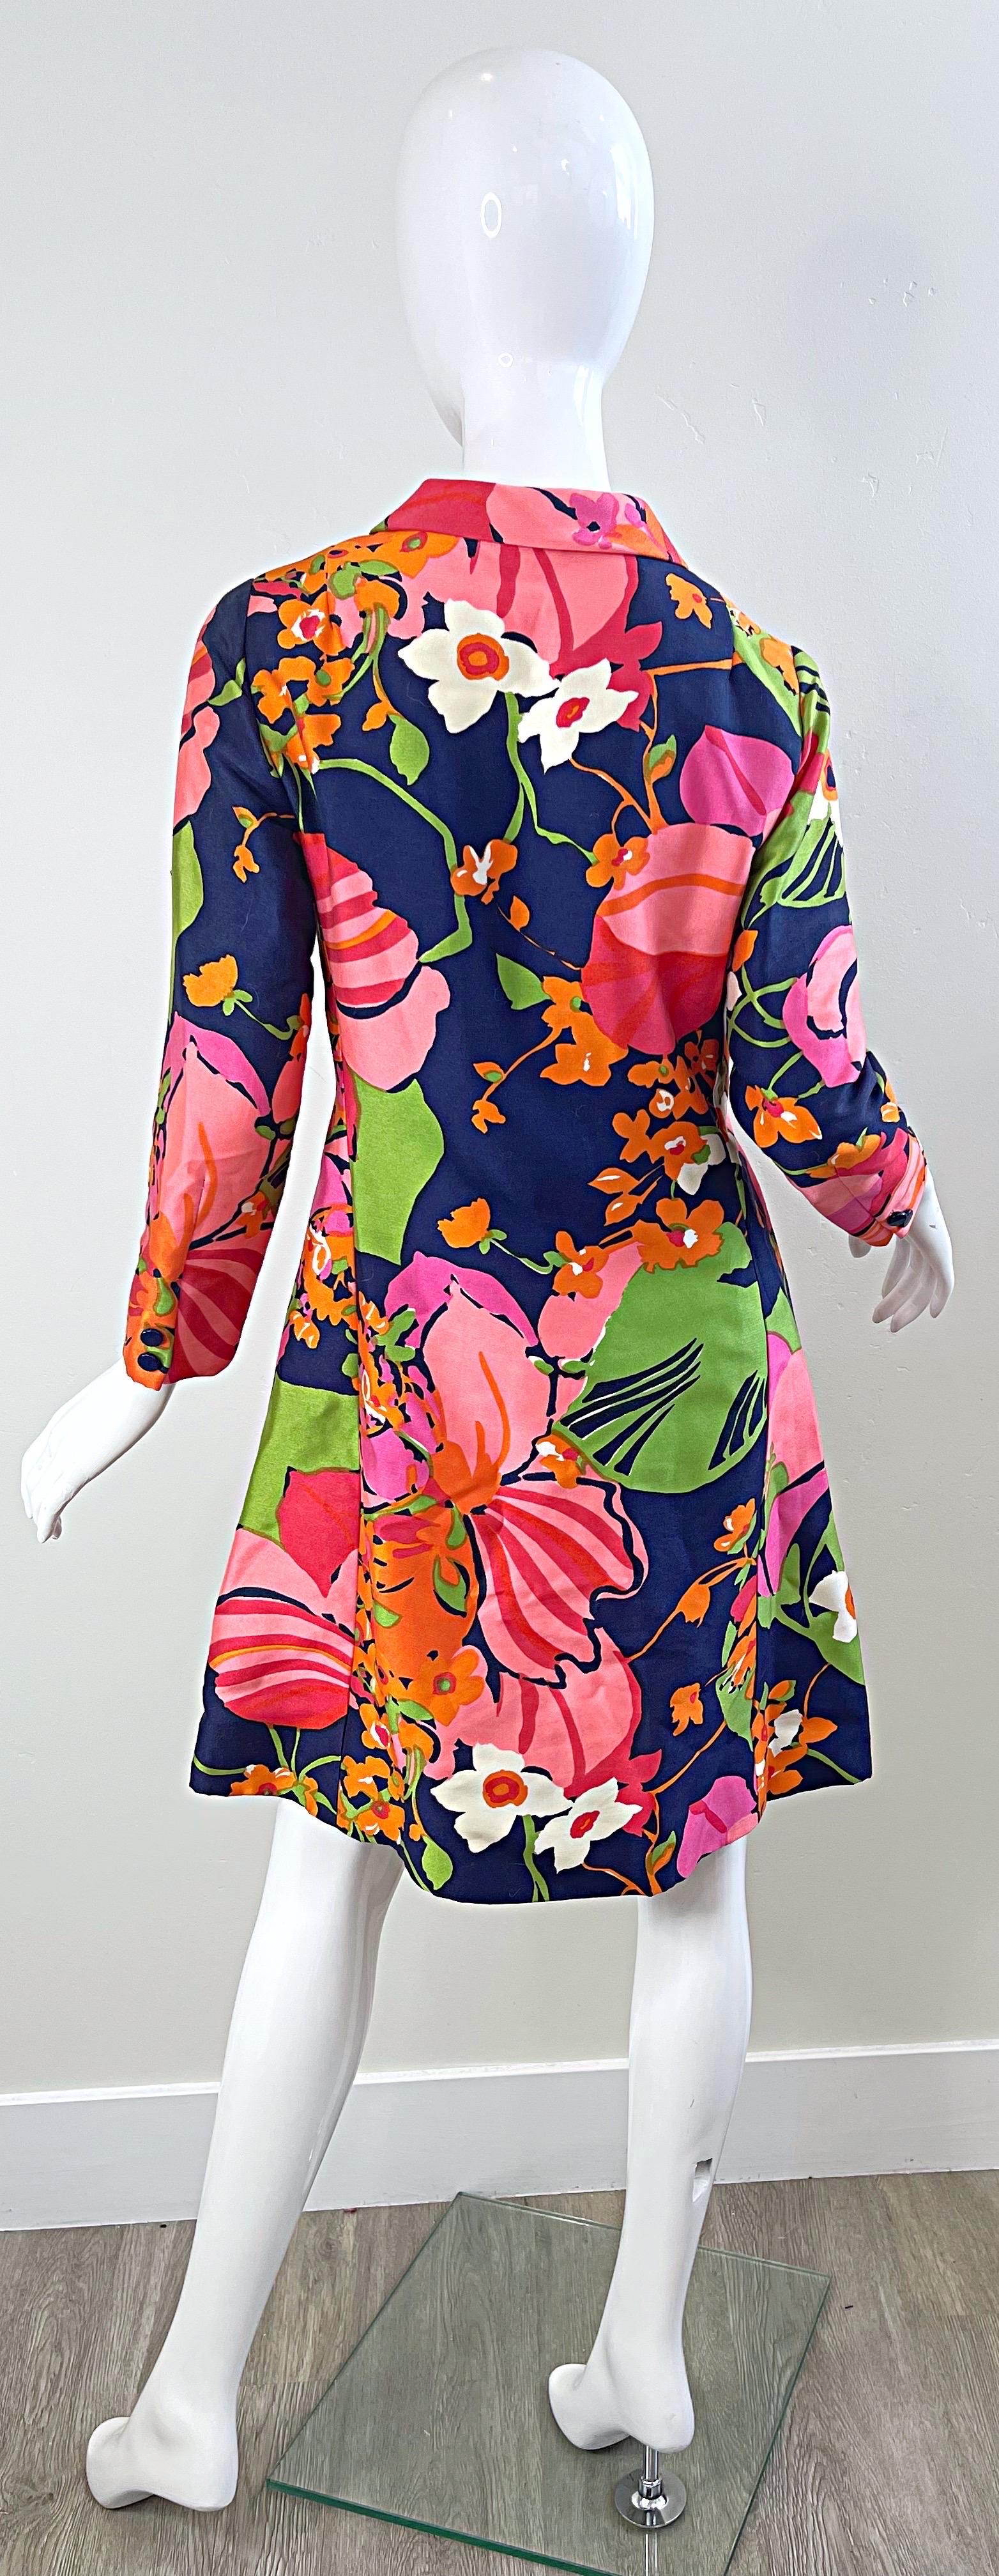 Saks 5th Avenue 1960s Mod Retro Abstract Flower Print Vintage 60s Silk Dress 6